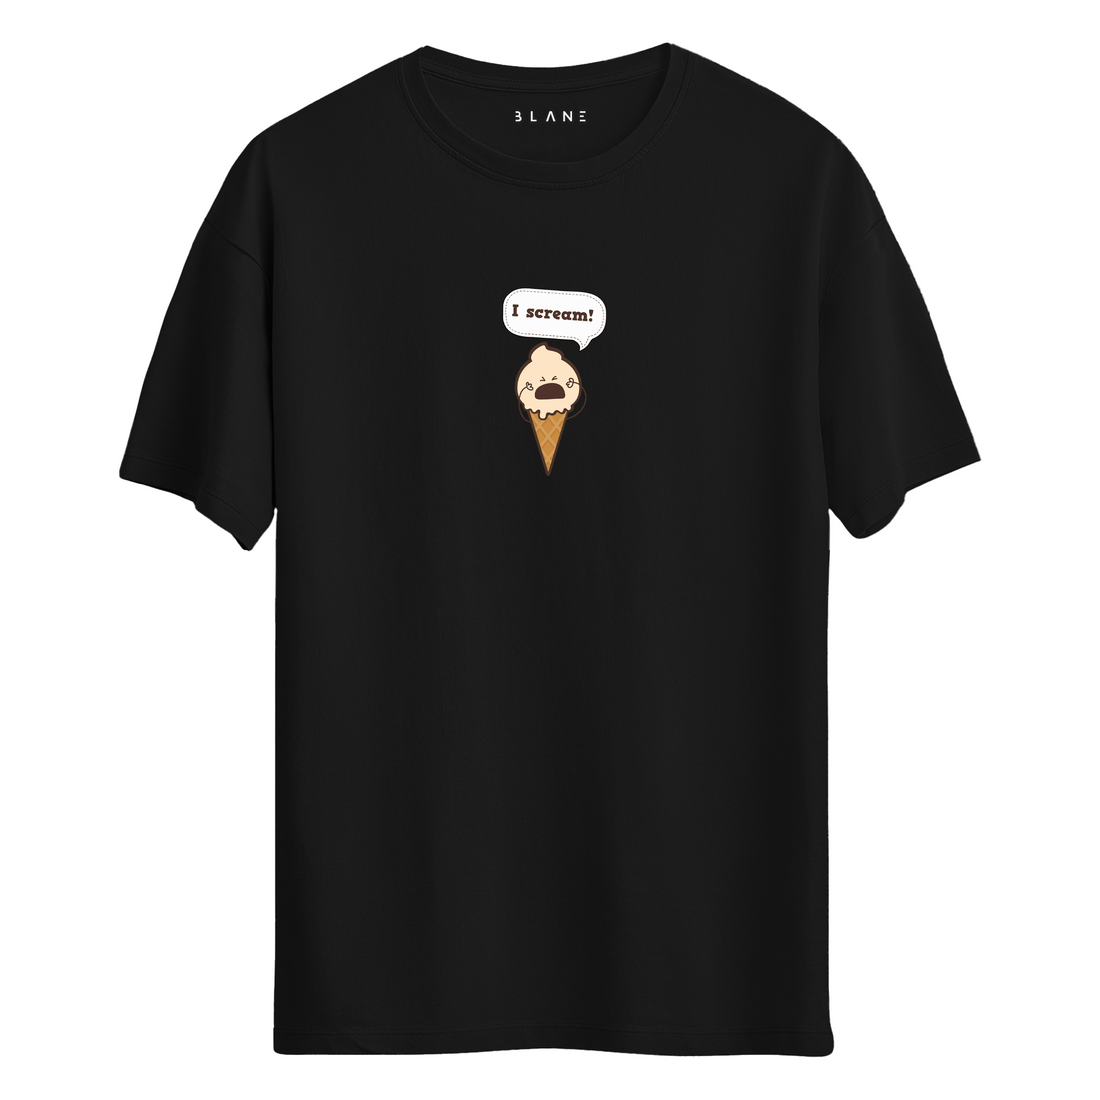 I Scream - T-Shirt